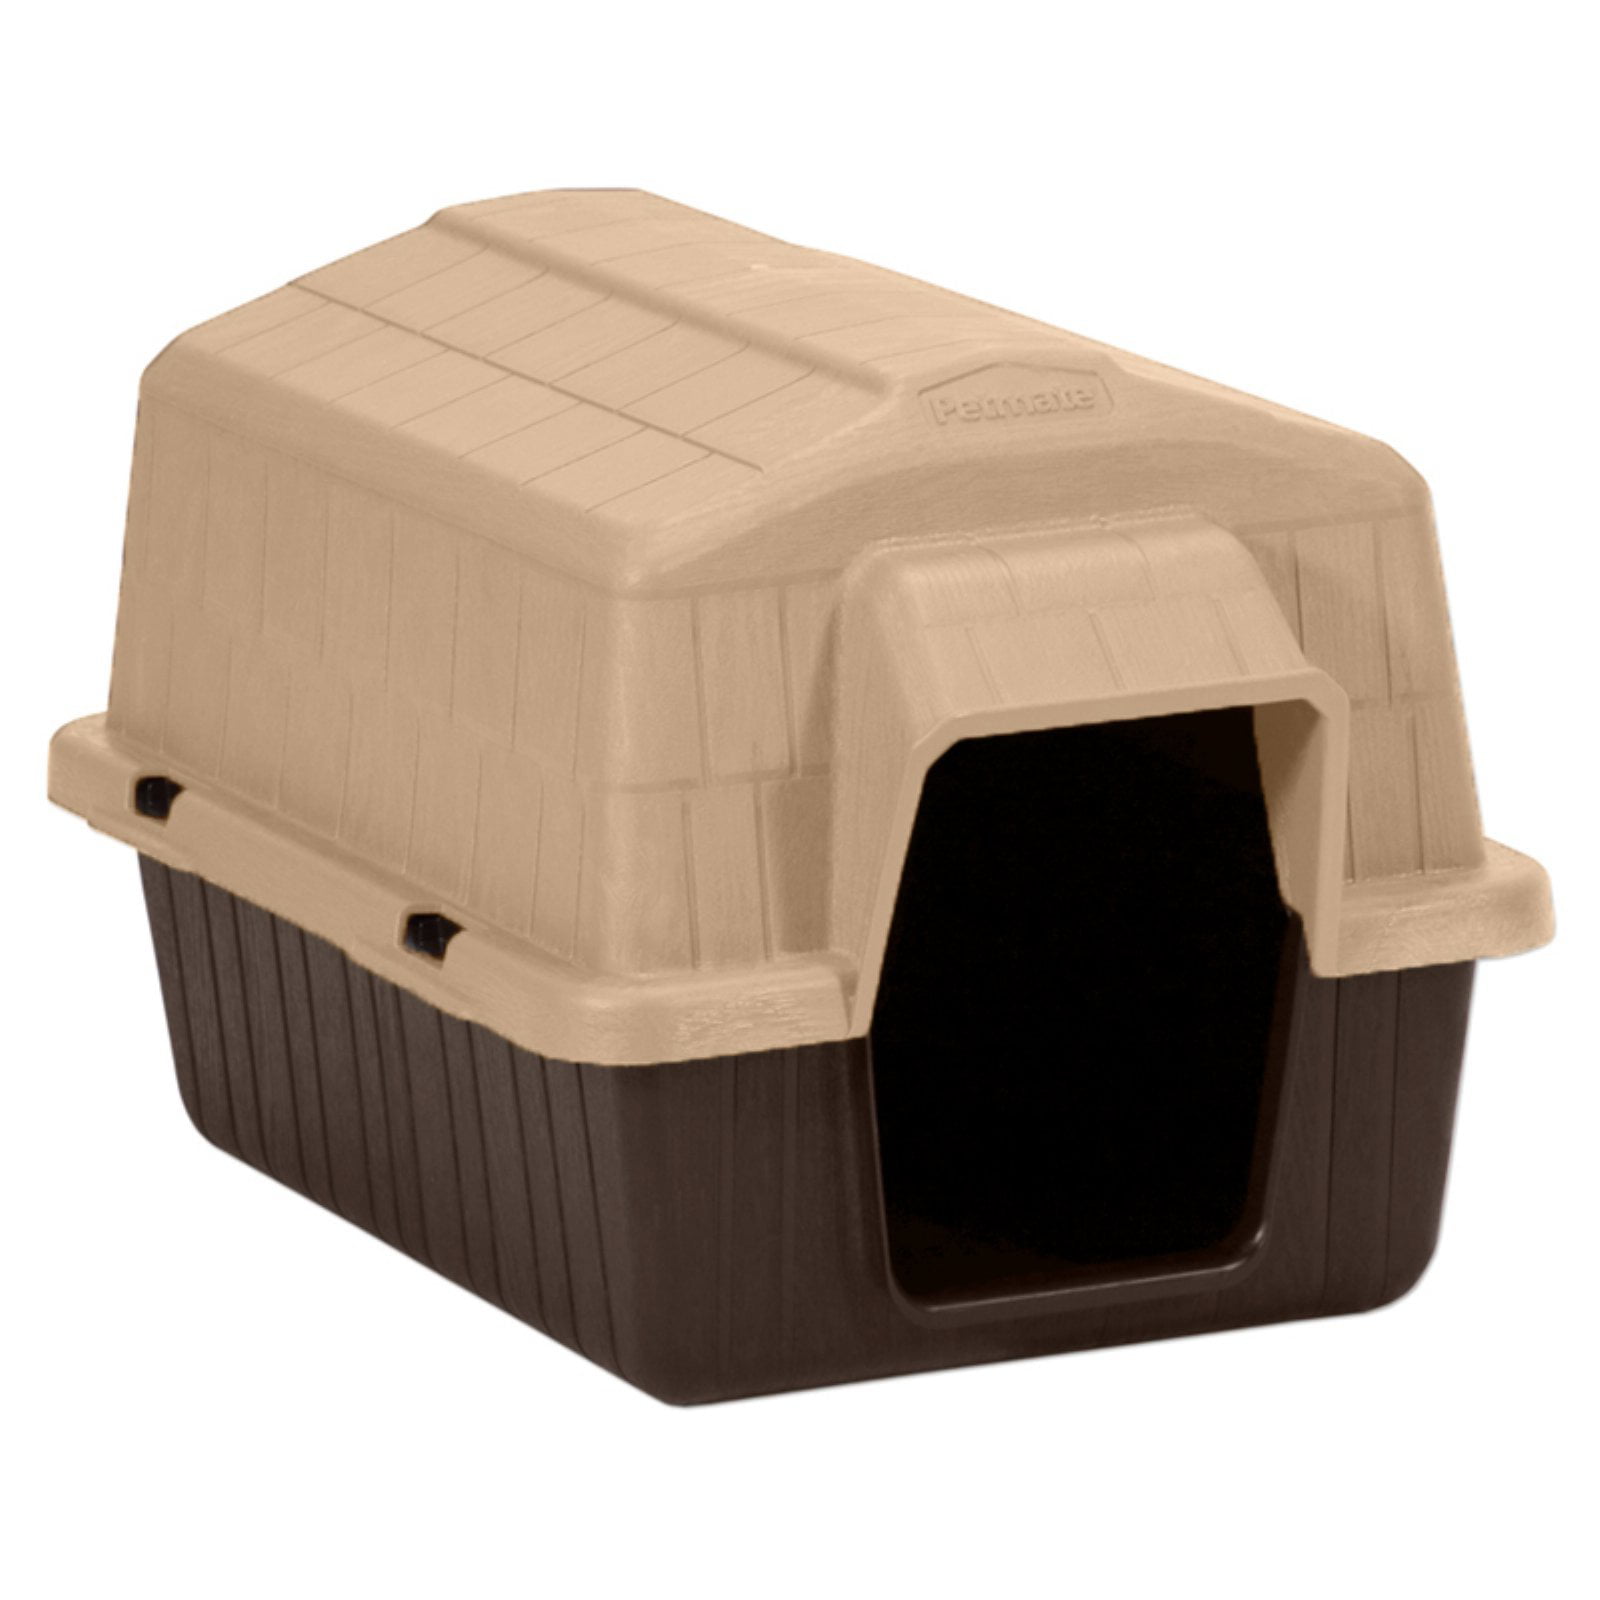 petbarn soft dog crates